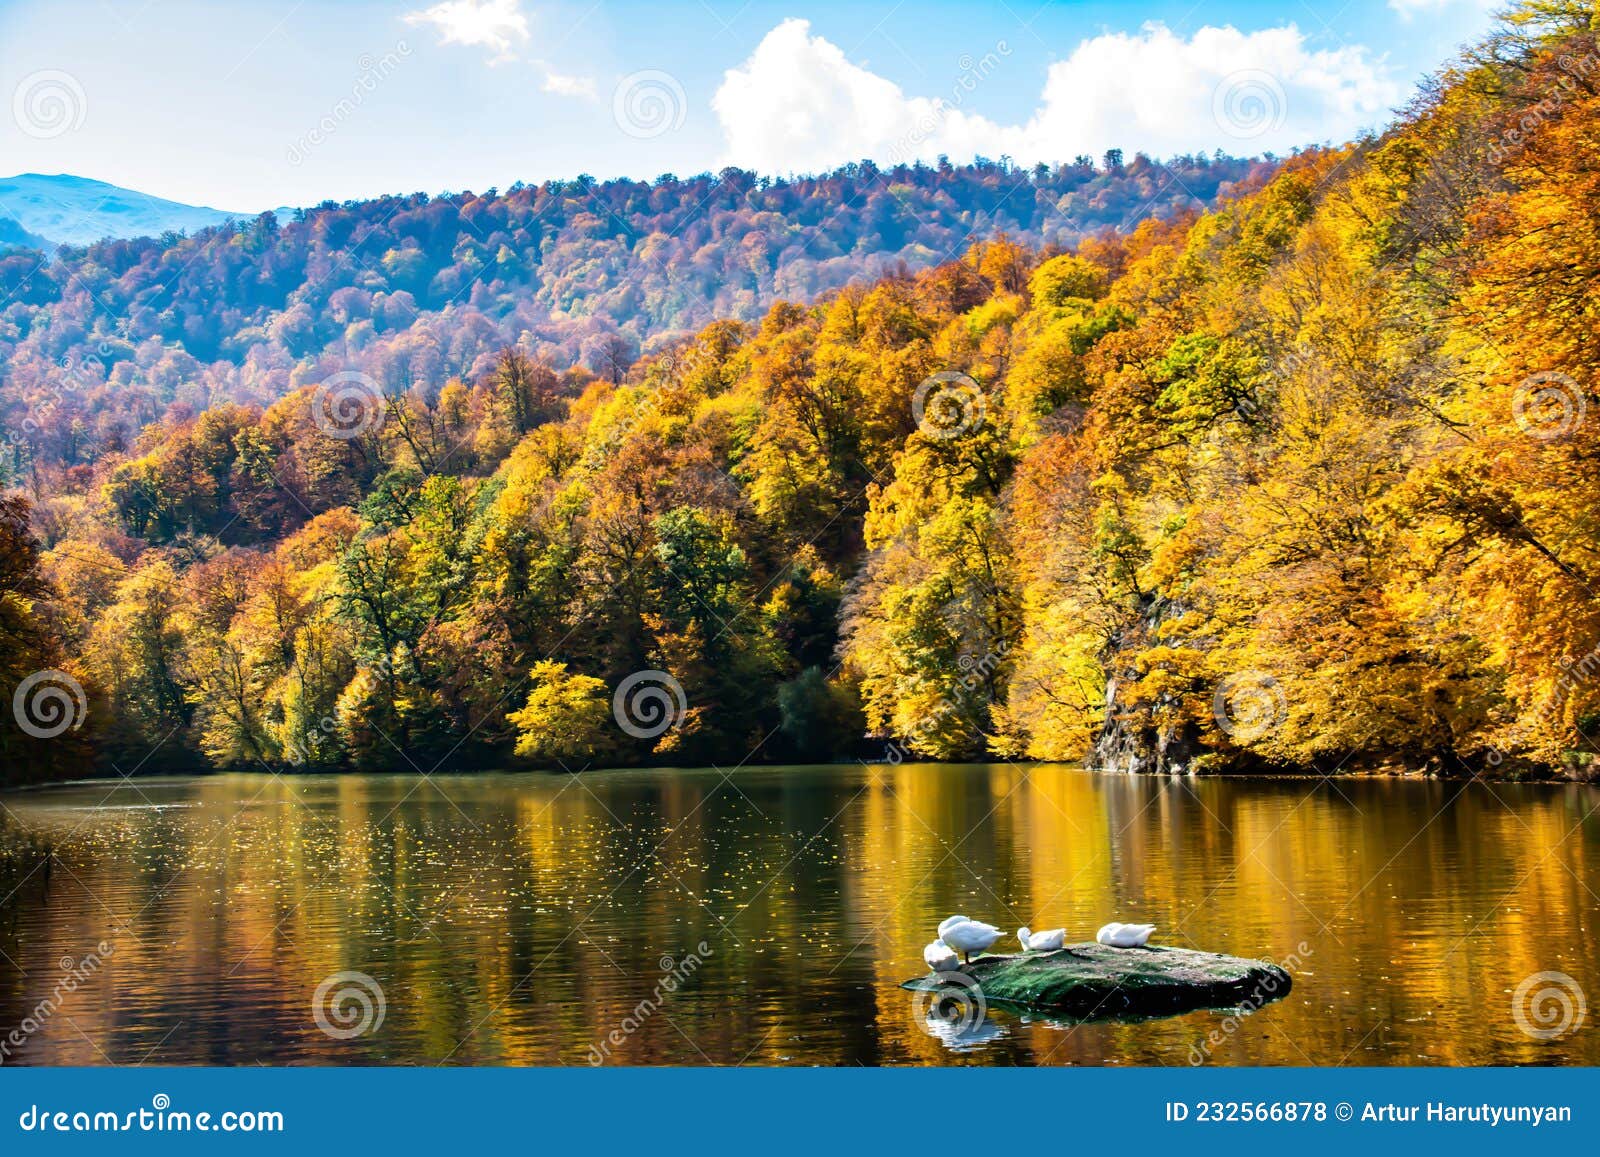 Lake Surrounded by Yellow Autumn Forest. Lake in the Autumn Forest. the Forest Turned Yellow. Beautiful Autumn Landscape Stock - Image of season, foliage: 232566878